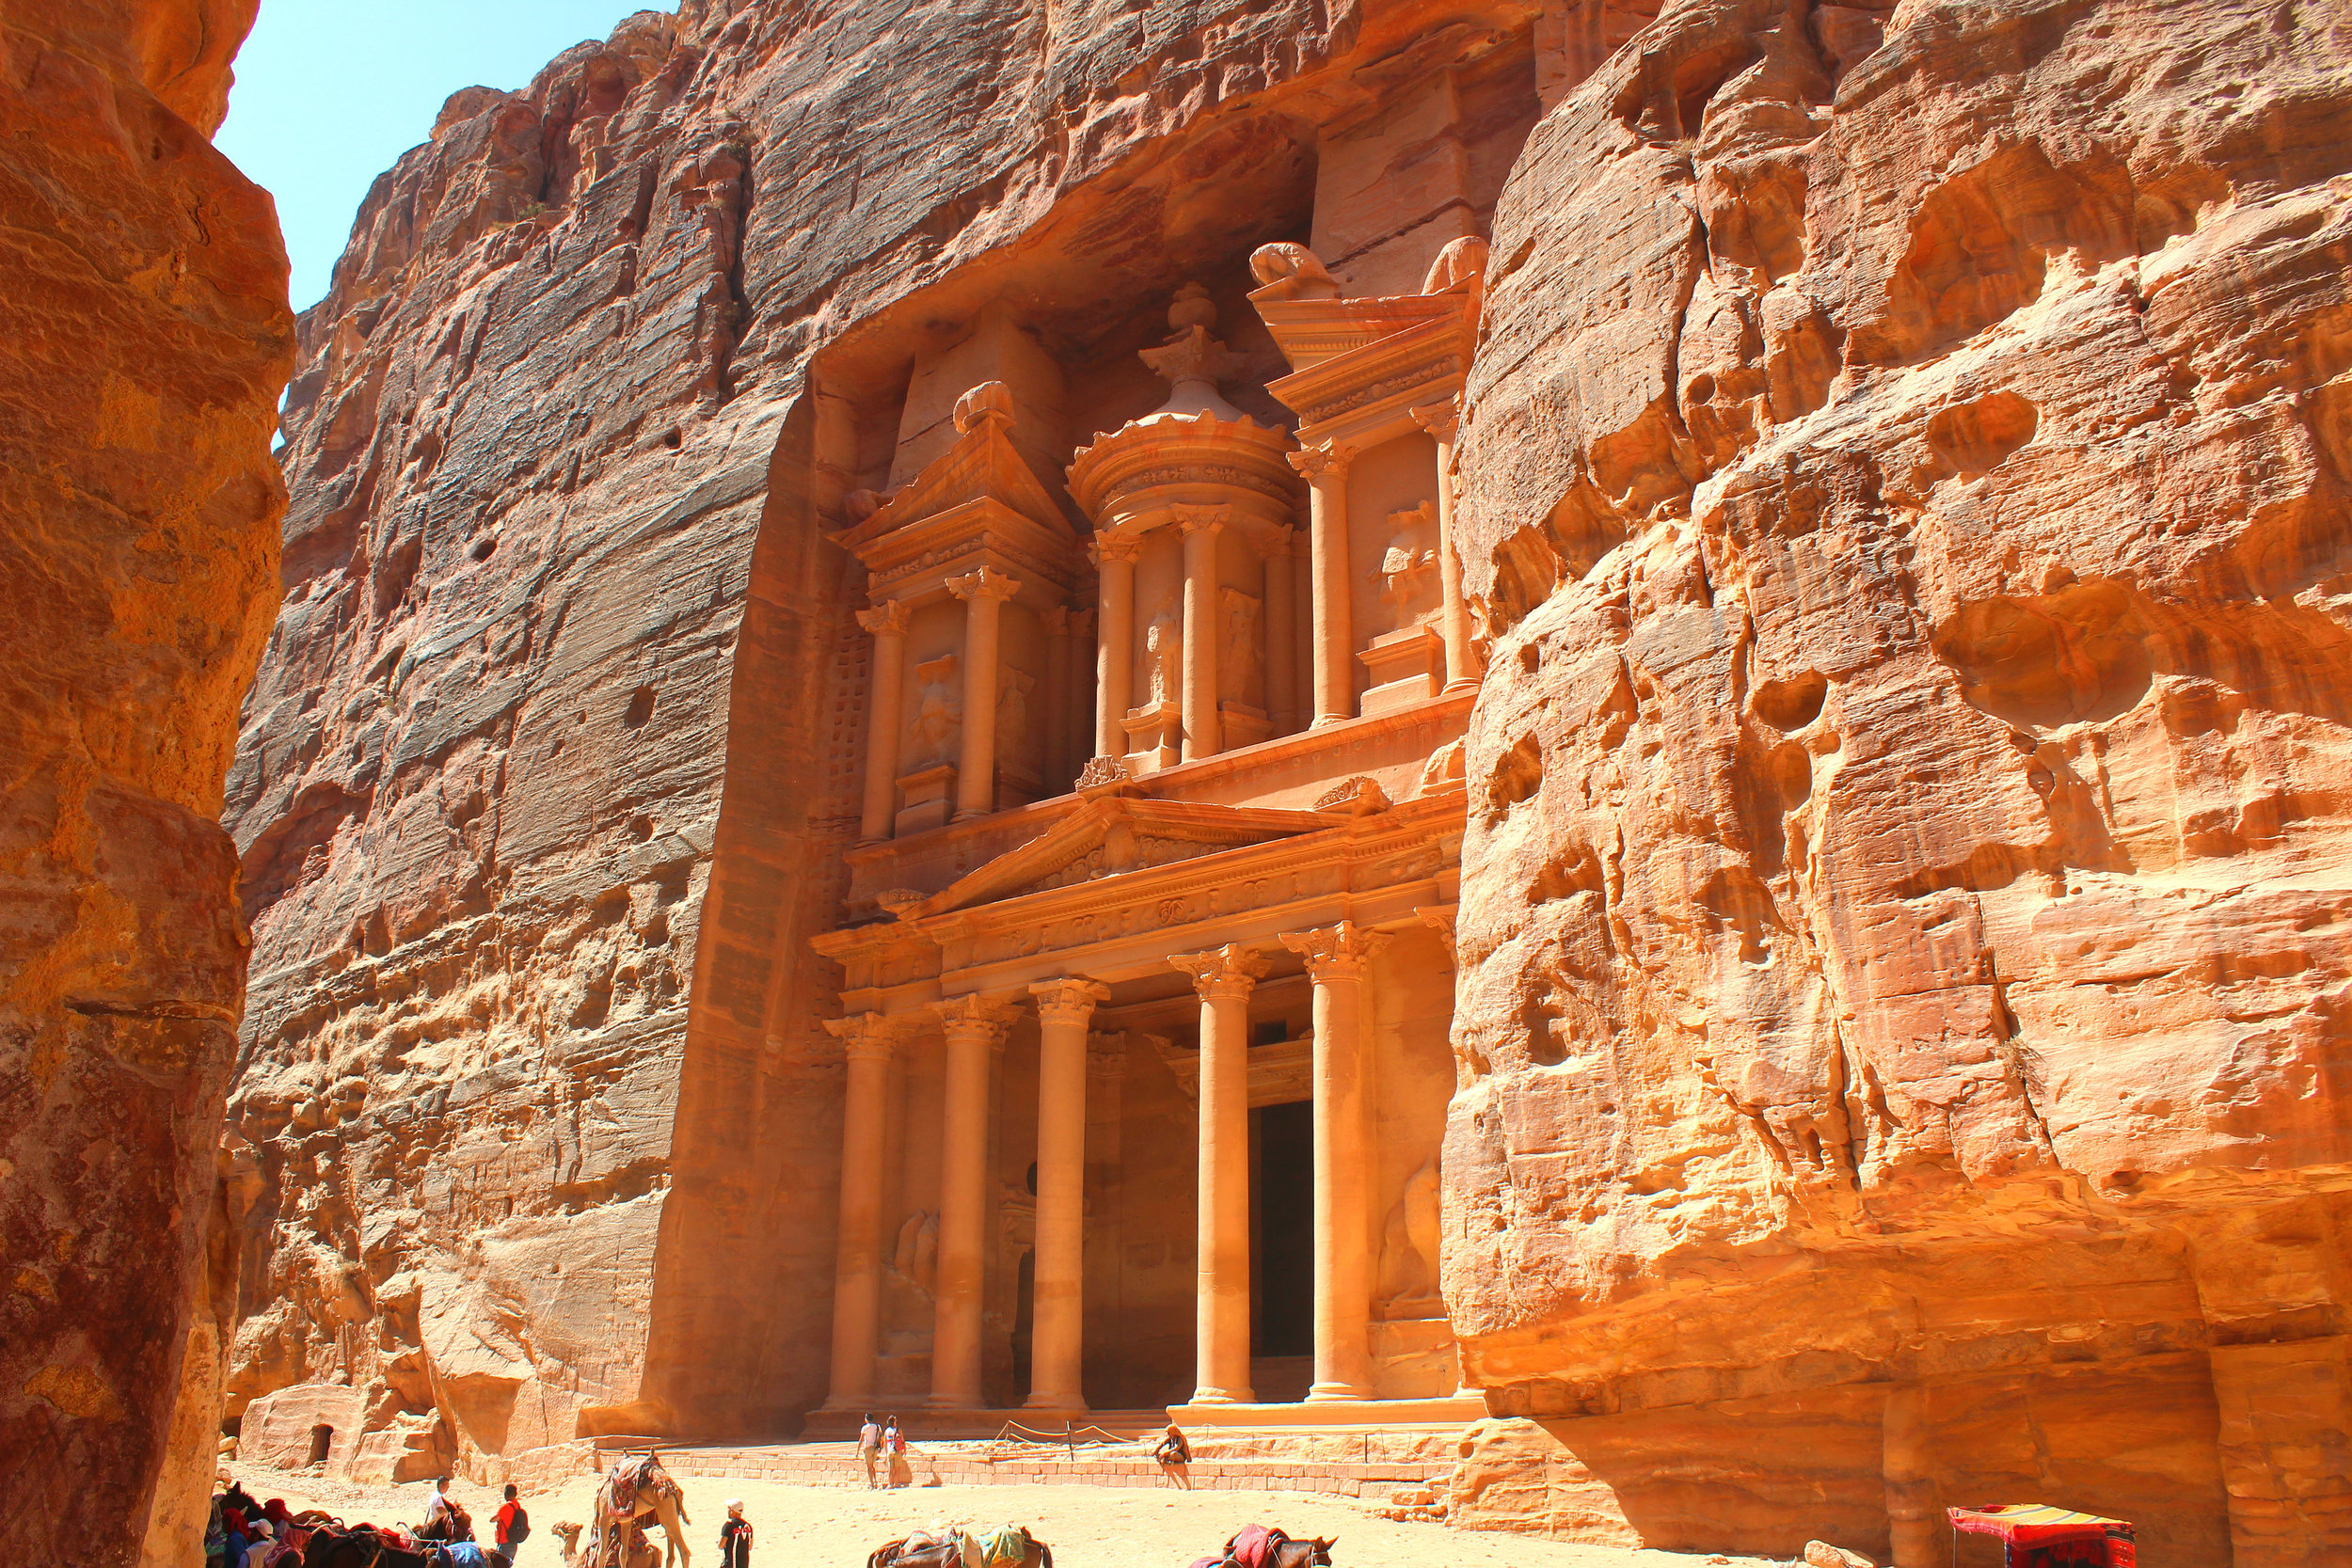 The Ancient Stone City of Petra, Jordan